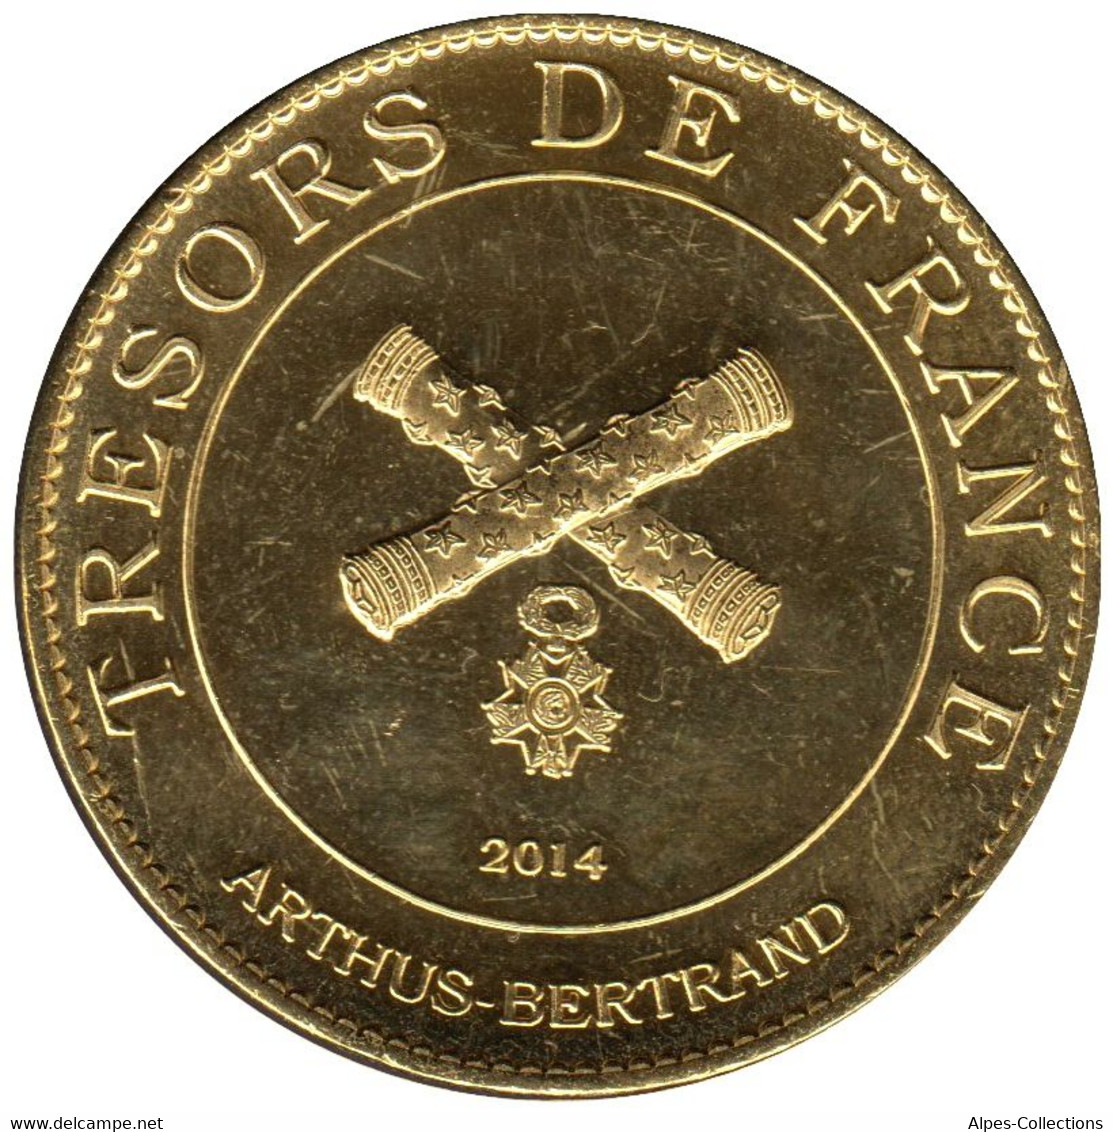 A55100-01 - JETON TOURISTIQUE ARTHUS B. - Citadelle De Verdun - 2014.3 - 2014